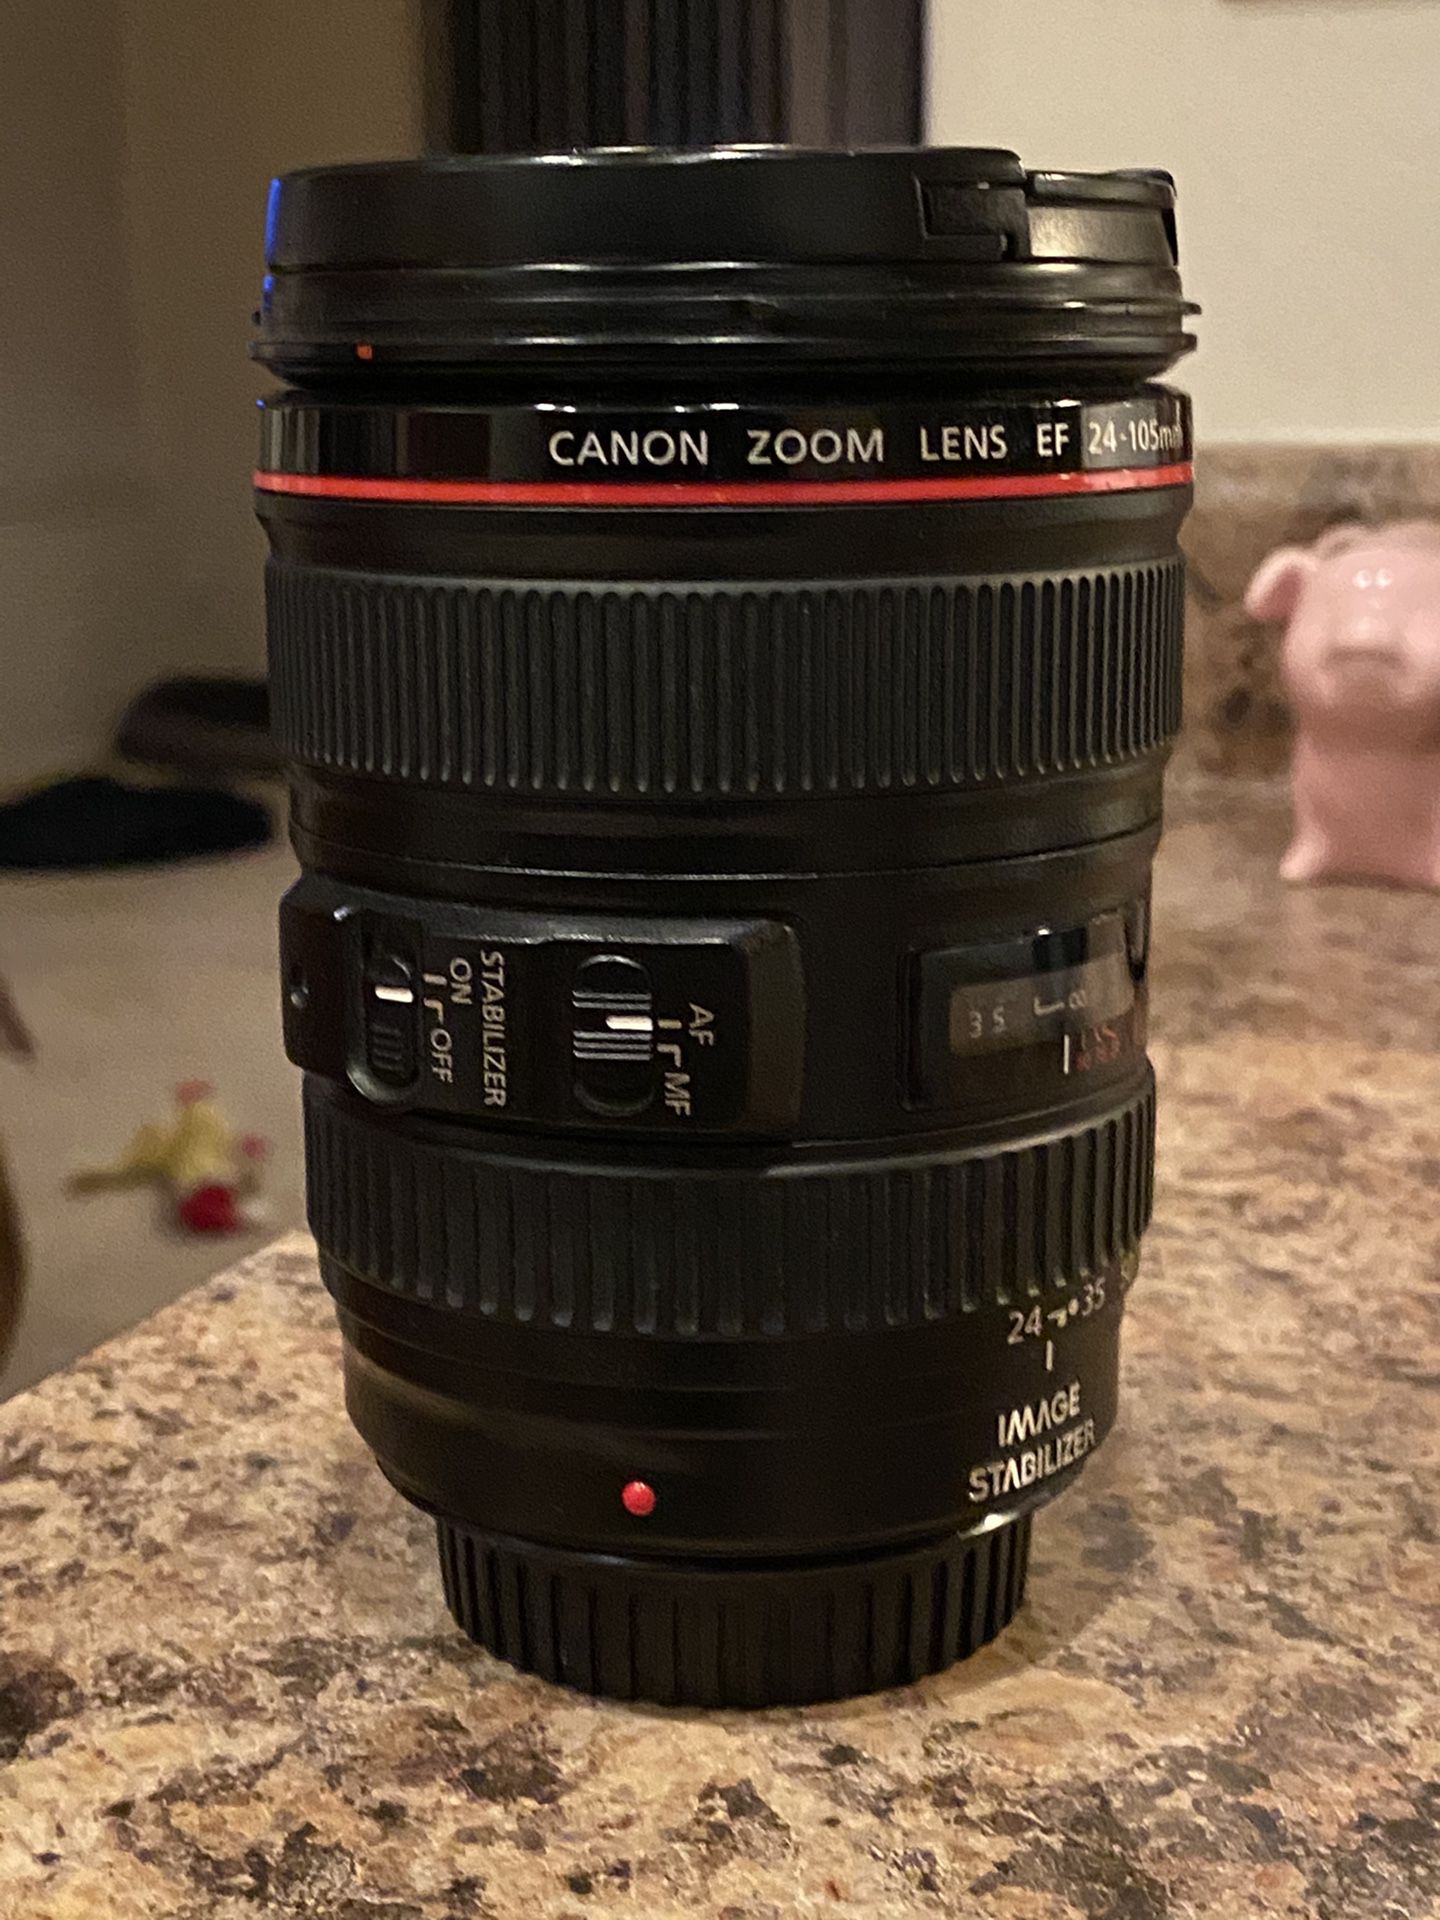 Canon 24-105mm lens